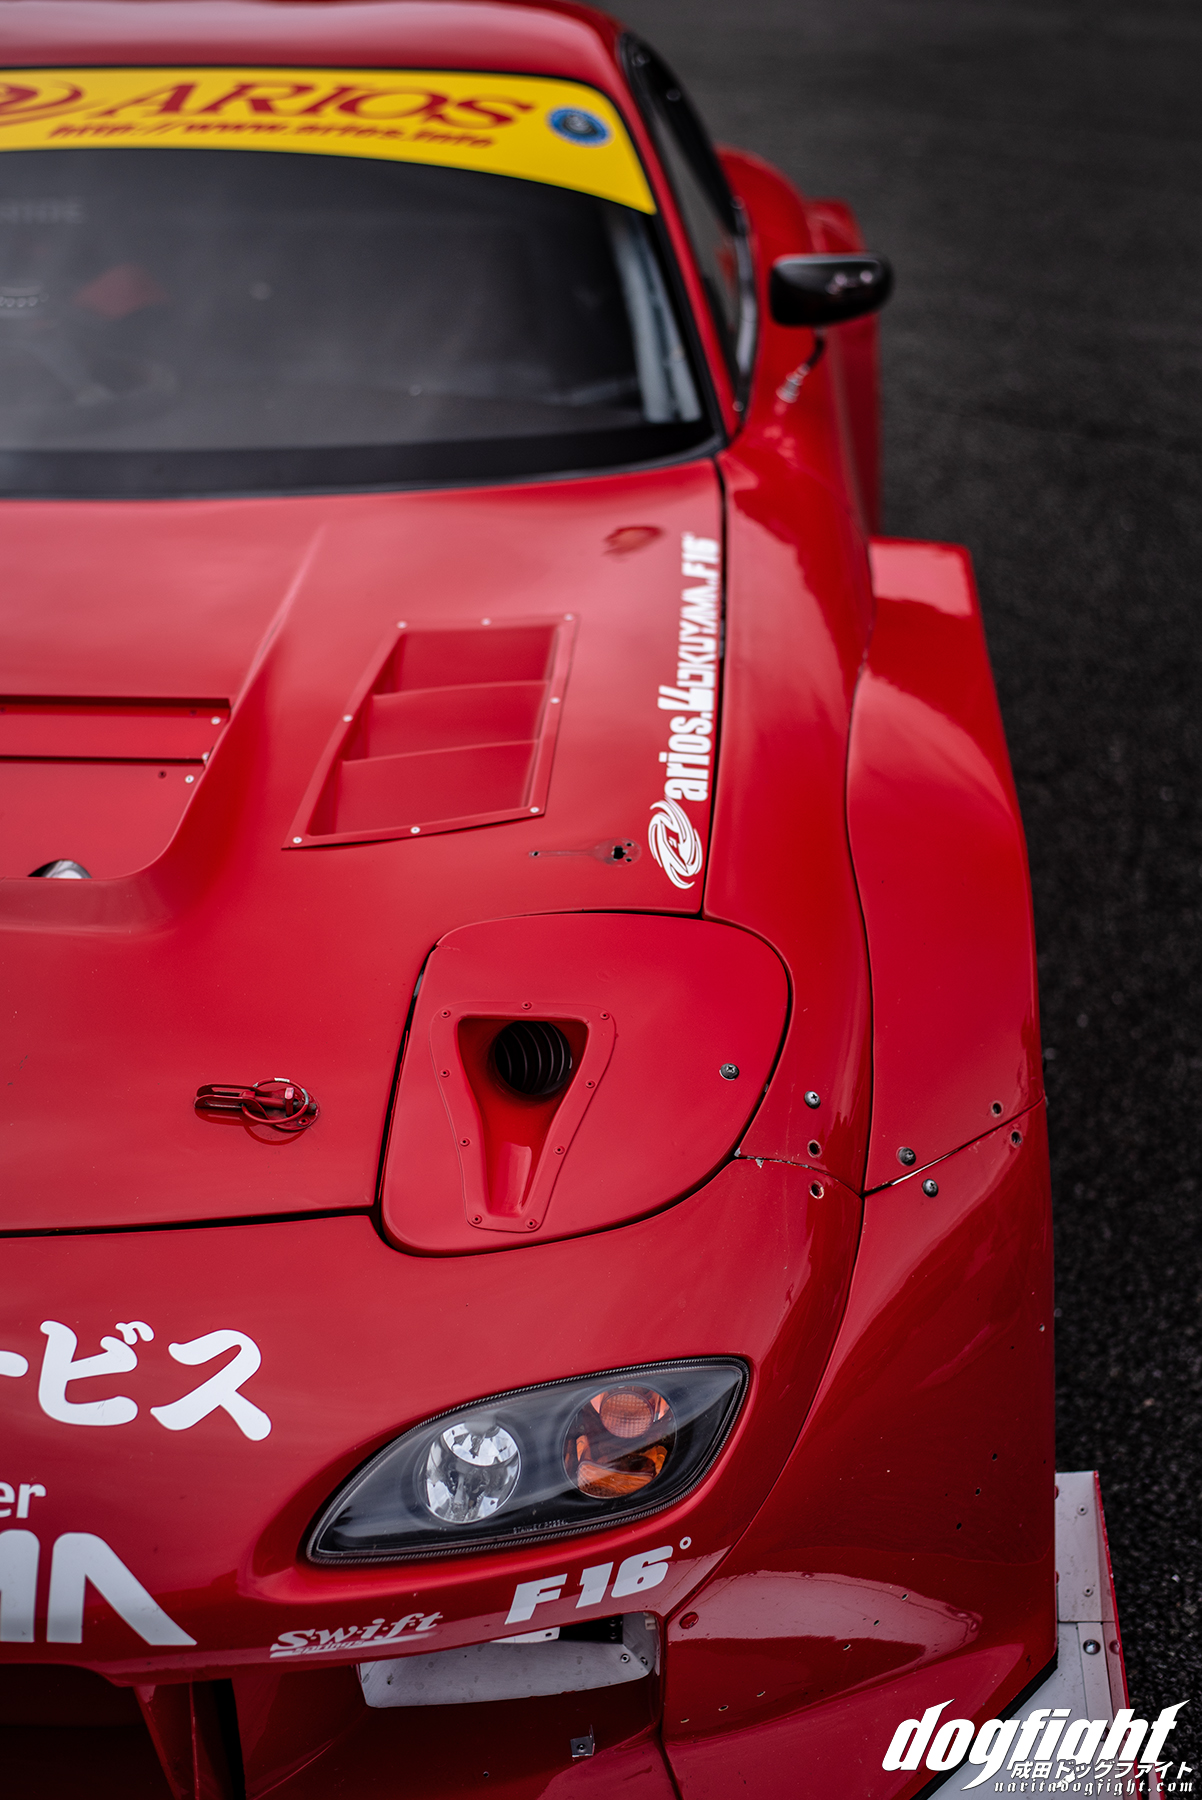 General 1202x1800 Japanese cars sports car race cars car vehicle red cars Mazda RX-7 Japanese